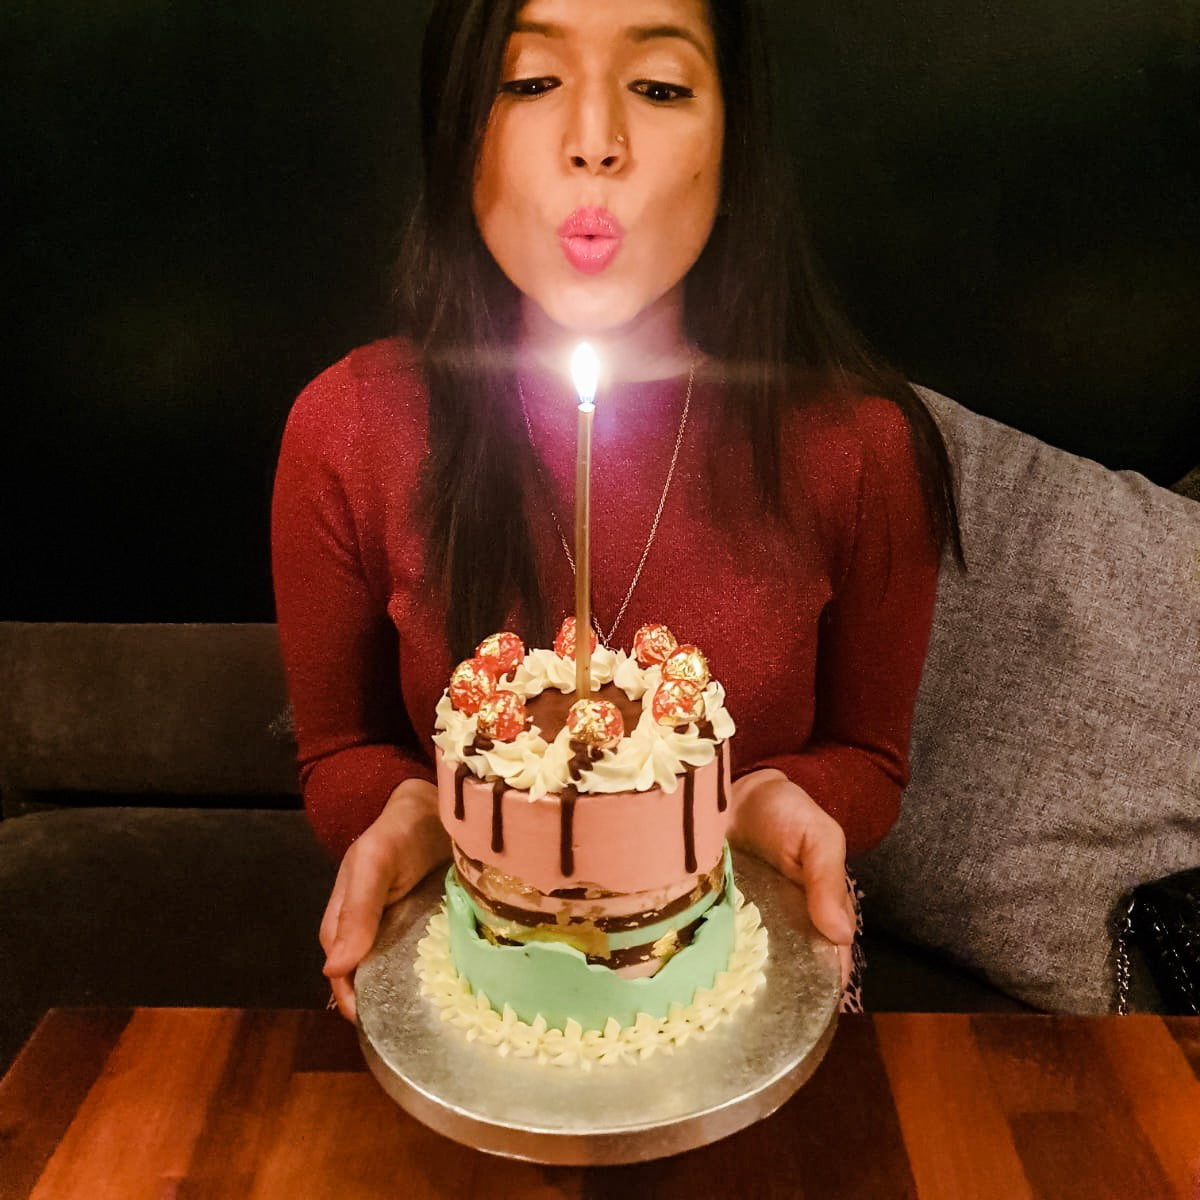 How to send a virtual birthday cake | eHow UK